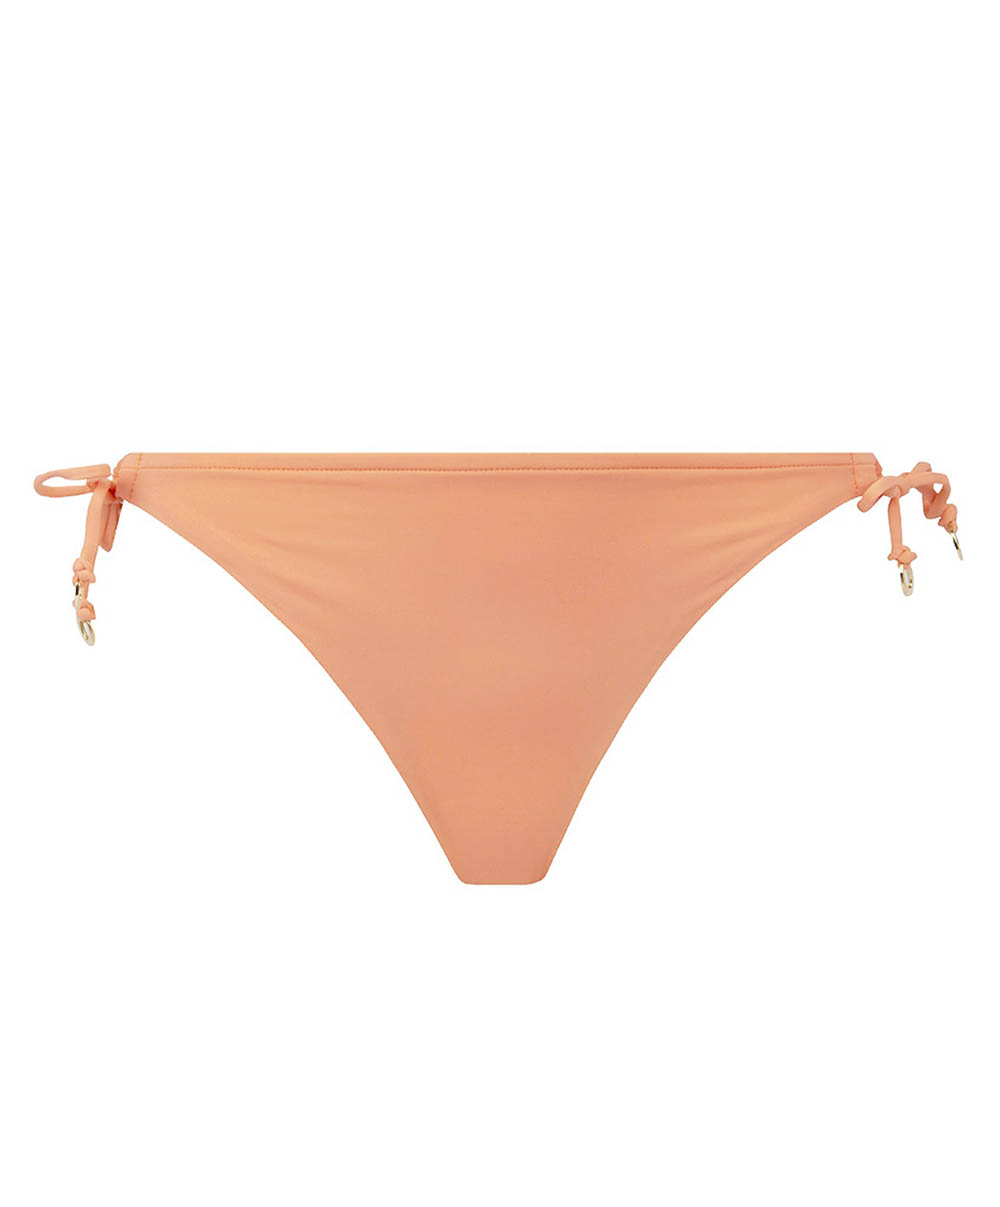 Bikini swimming brief with side ties Déesse lagon Peach LISE CHARMEL